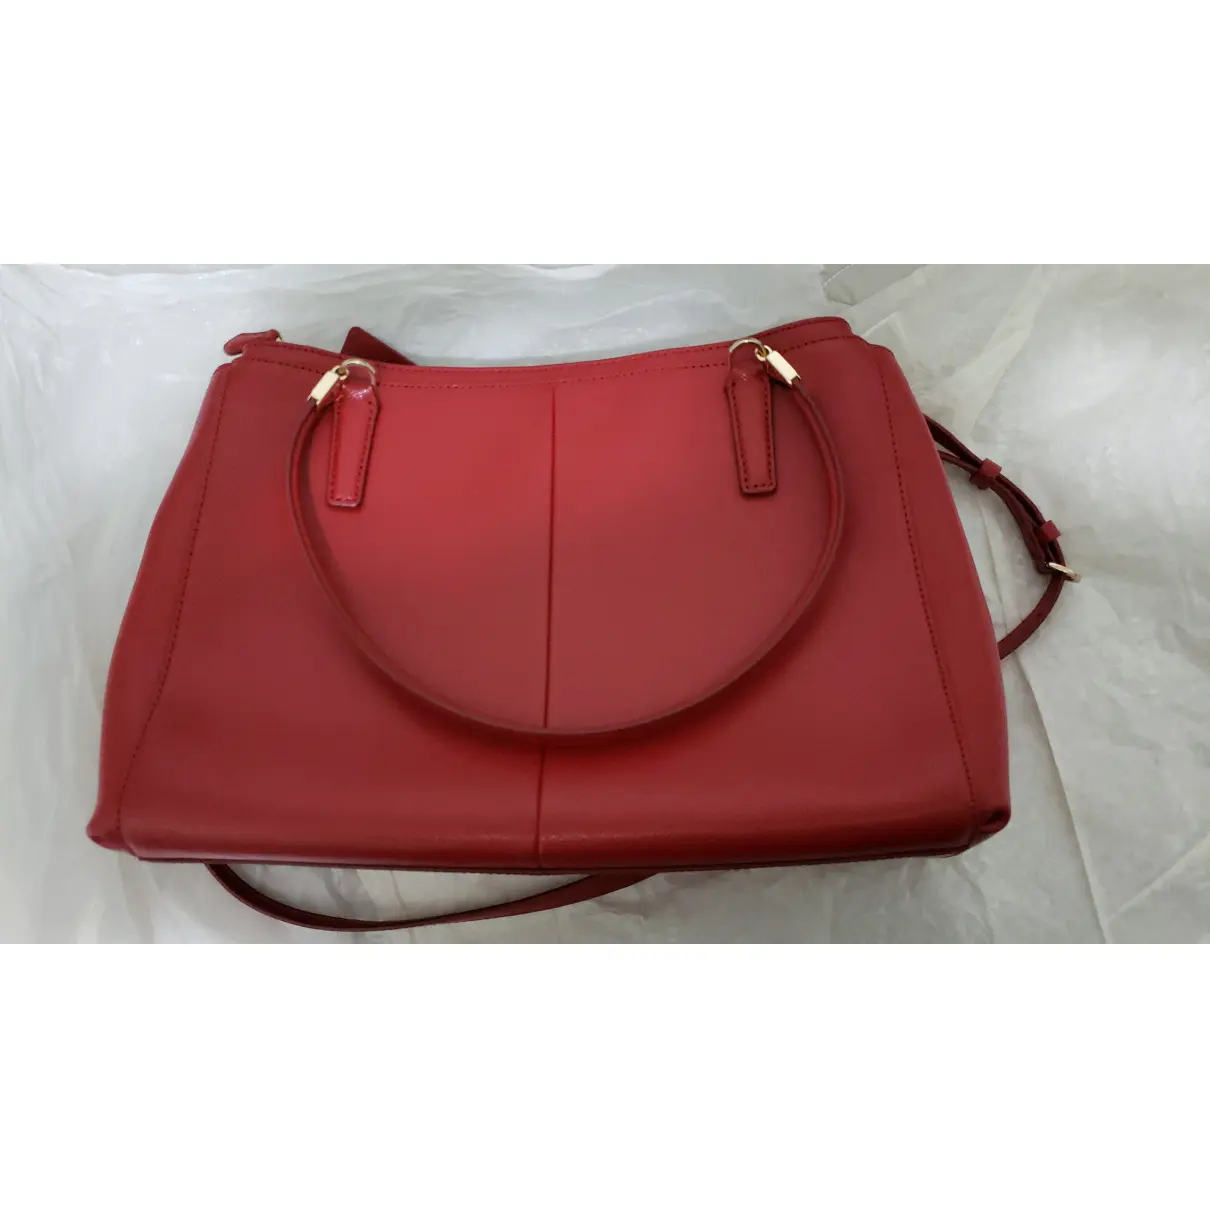 Buy Coach Gramercy Satchel leather handbag online